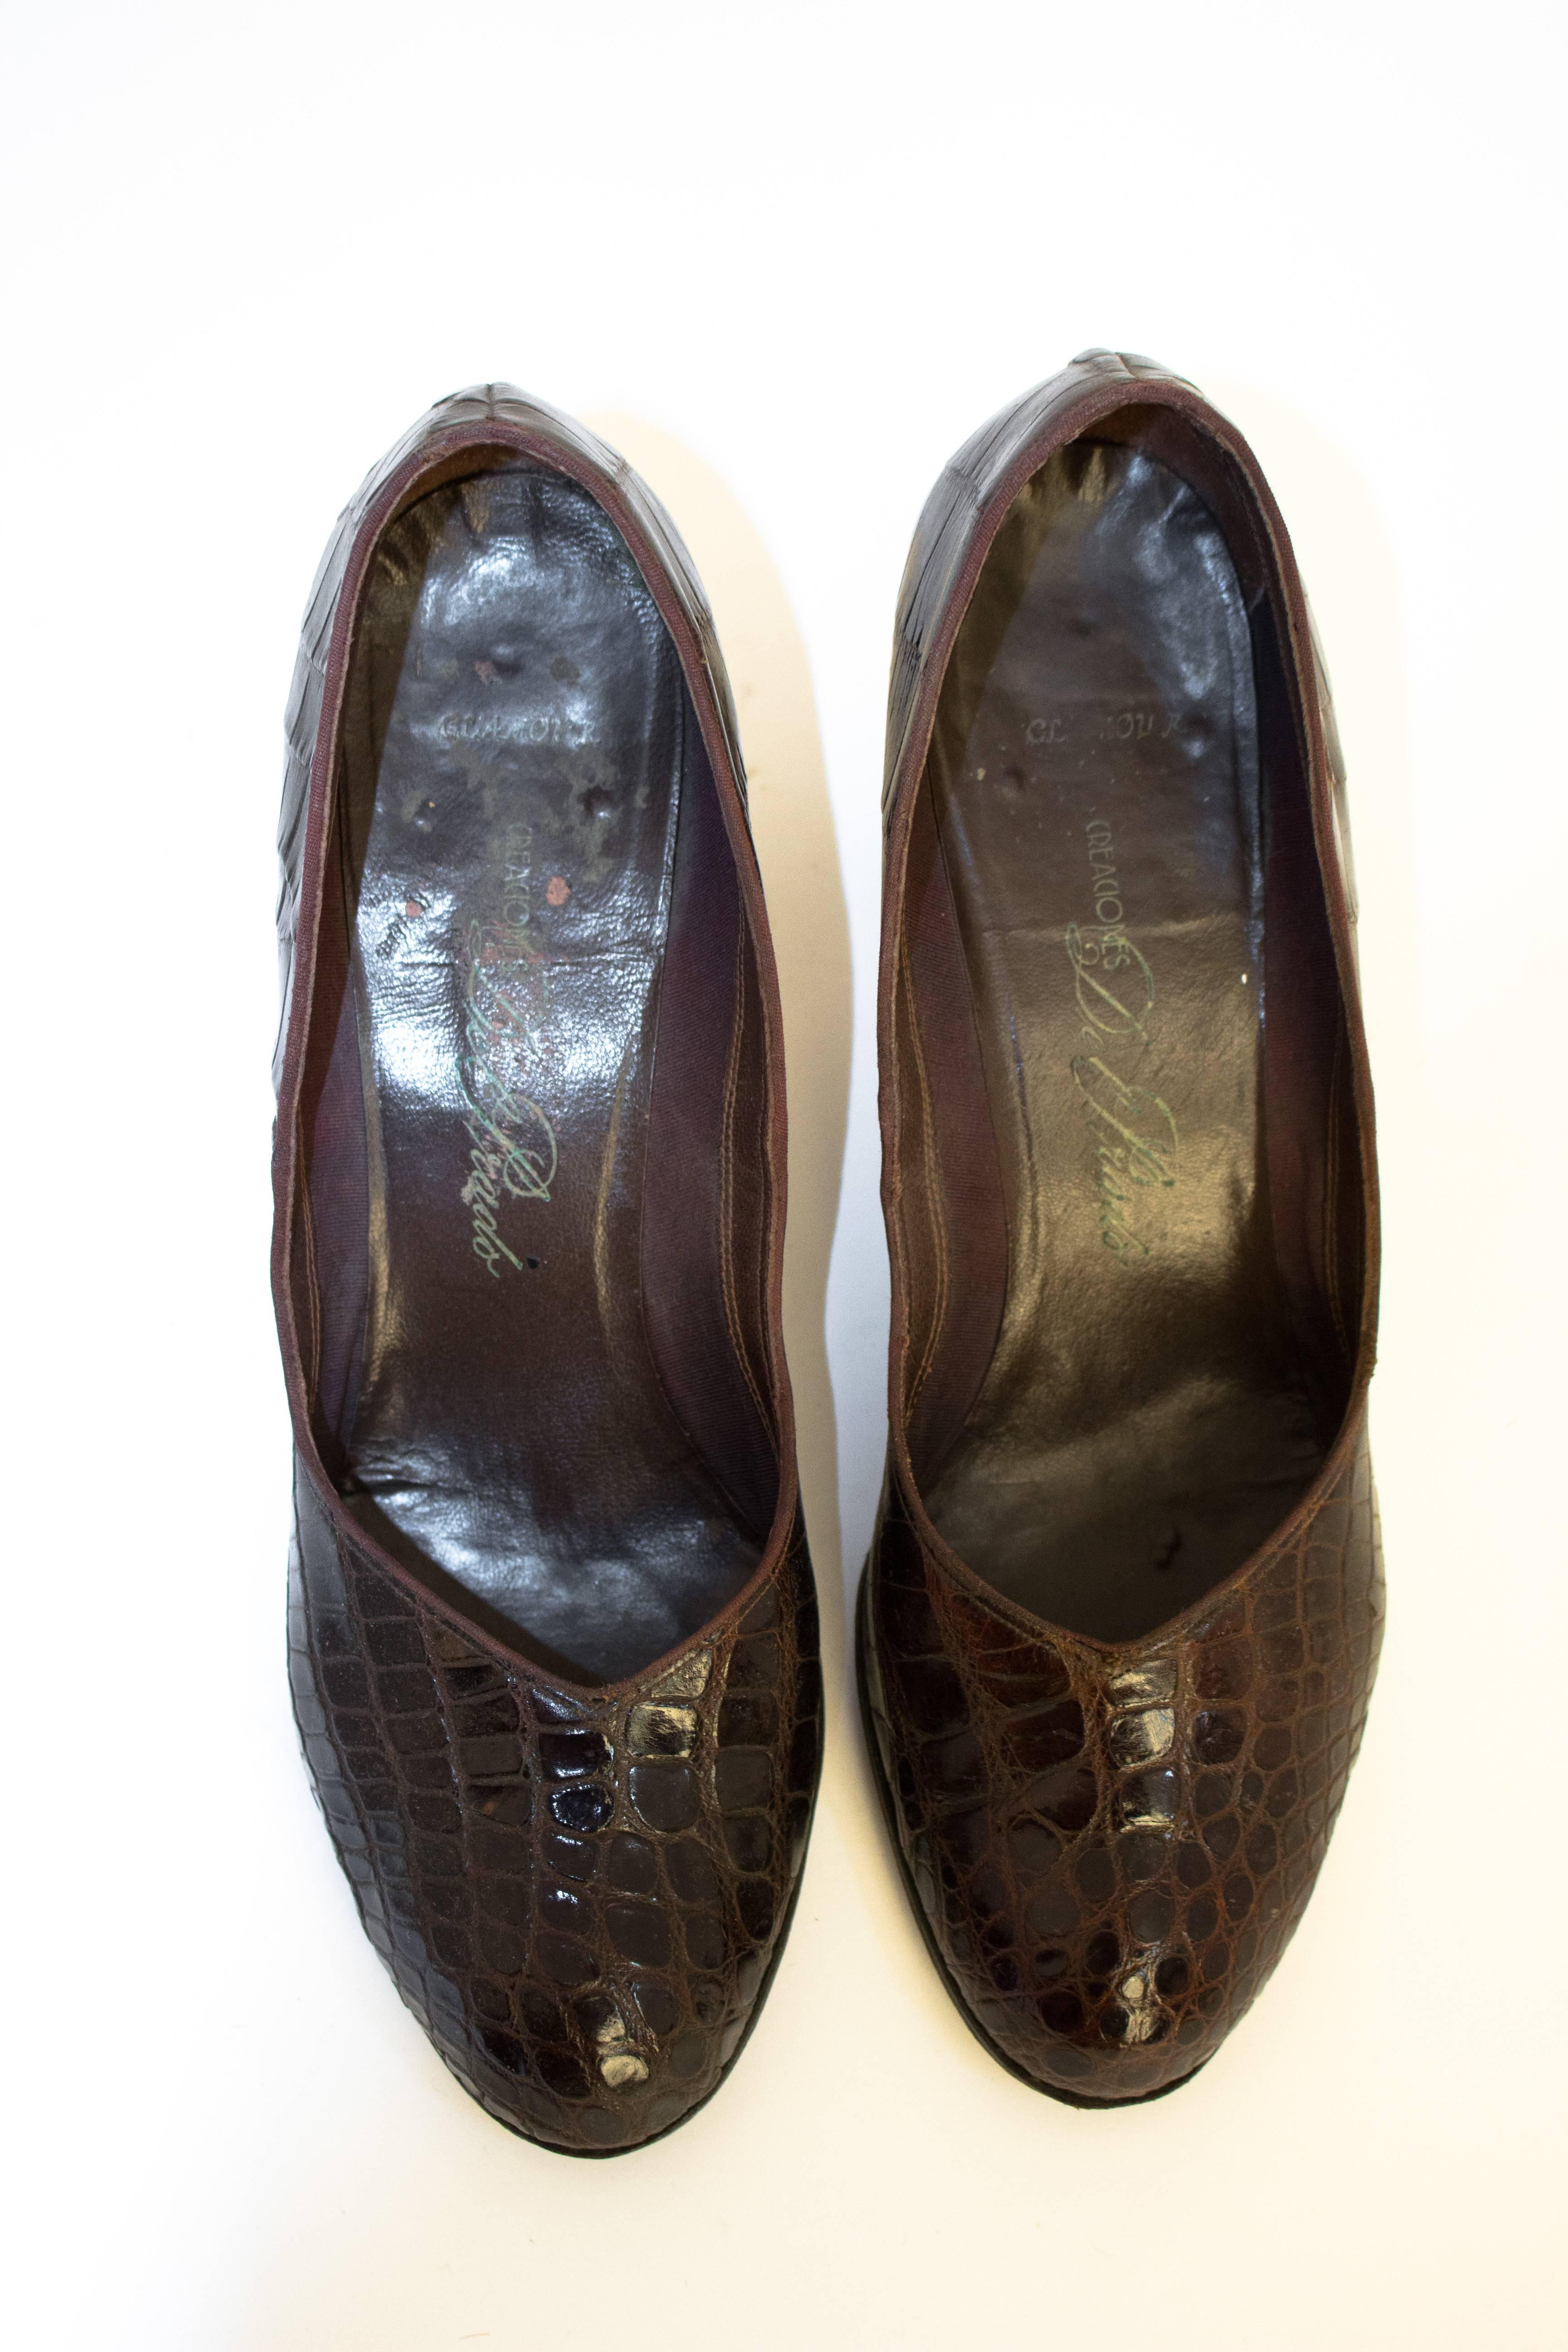 40s dark chocolate brown round toe heels. Leather soles. Comfortable width.